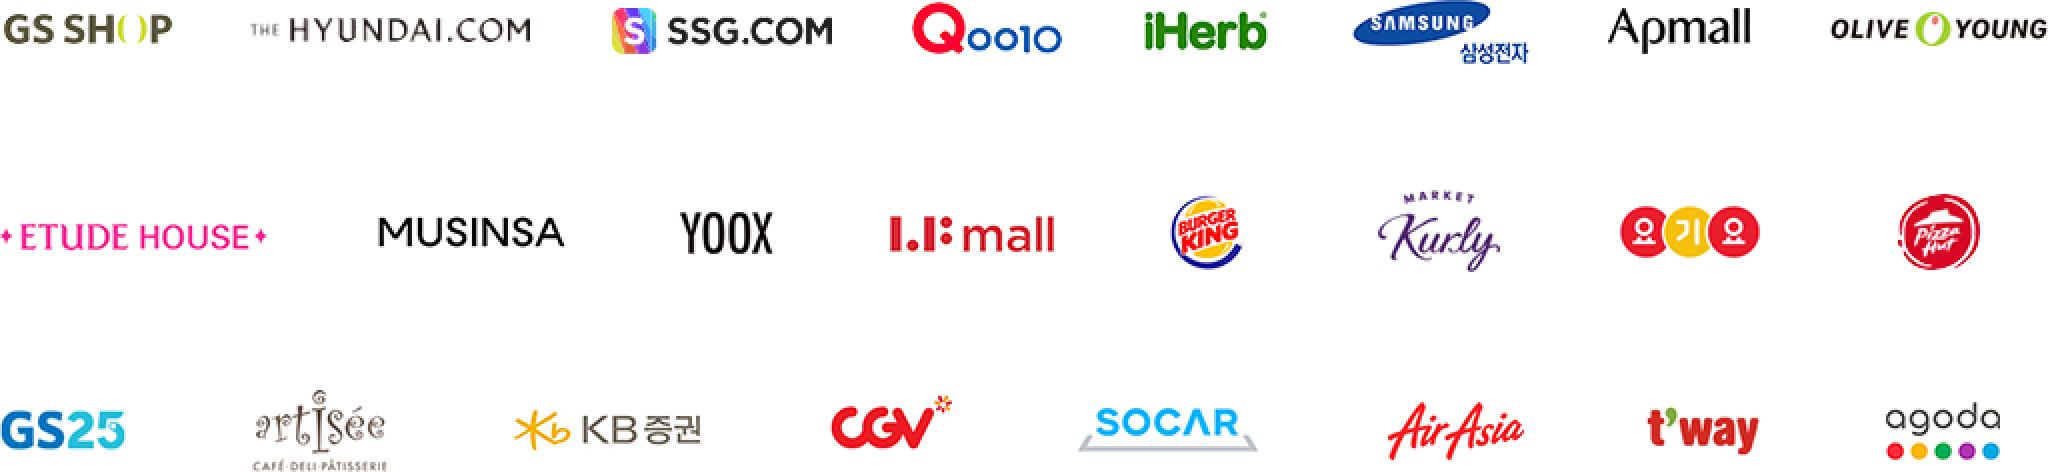 GS shop, the hyundai.com, SSG.com, Qoo10, iHerb, samsung, Apmall, olive young, etude house, musinsa, yoox, LF mall, burgerking, market kurly, 요기요, pizza hut, GS25, artisee, KB증권, CGV, socar, air asia, tway, agoda.